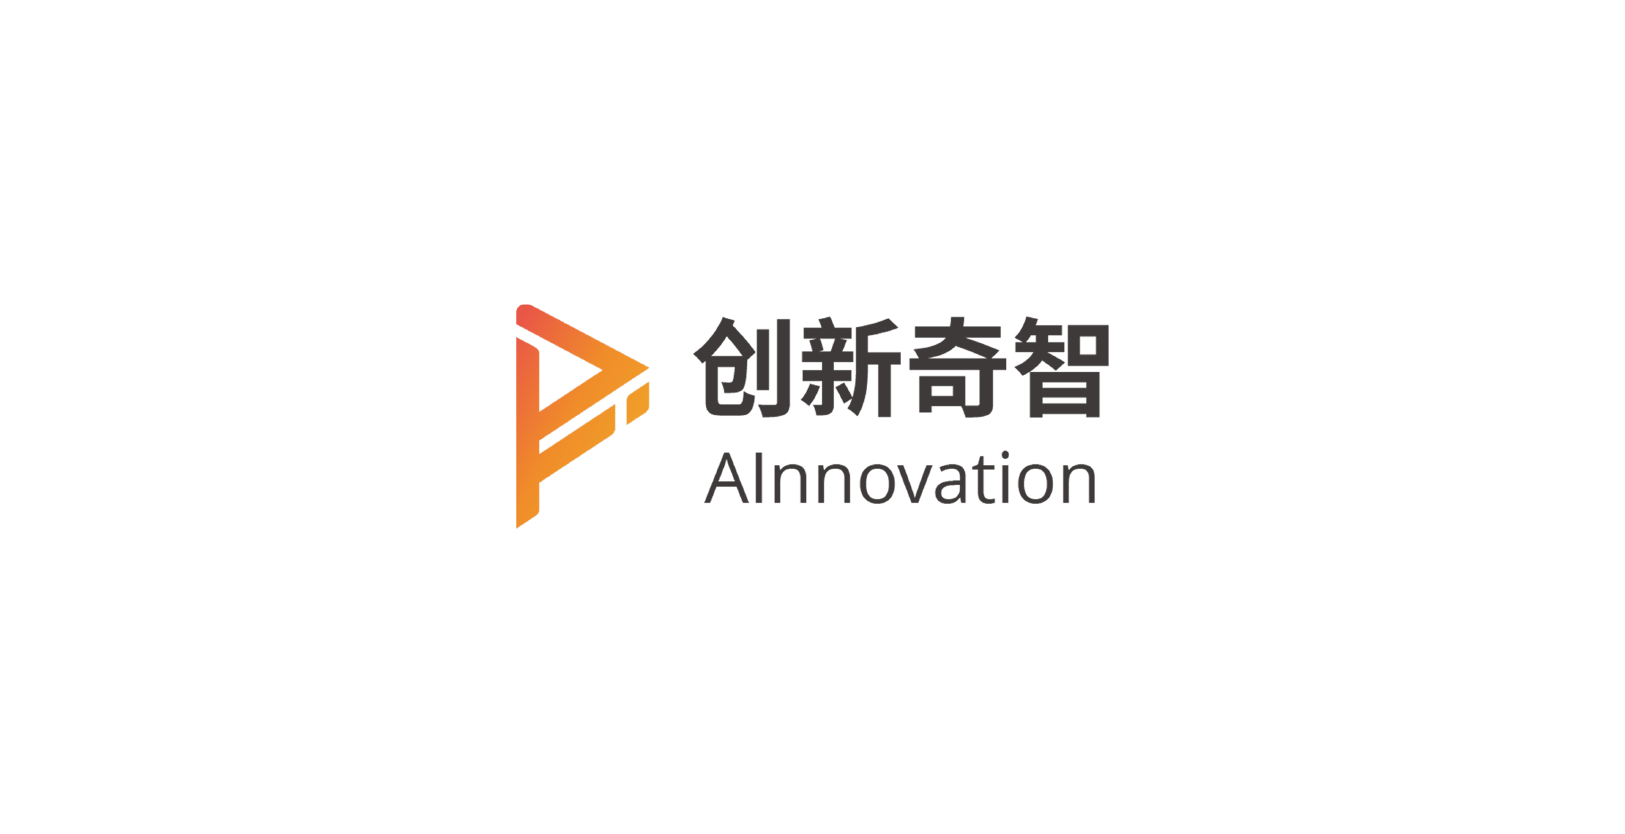 Vision Fund investment portfolio company AInnovation's logo